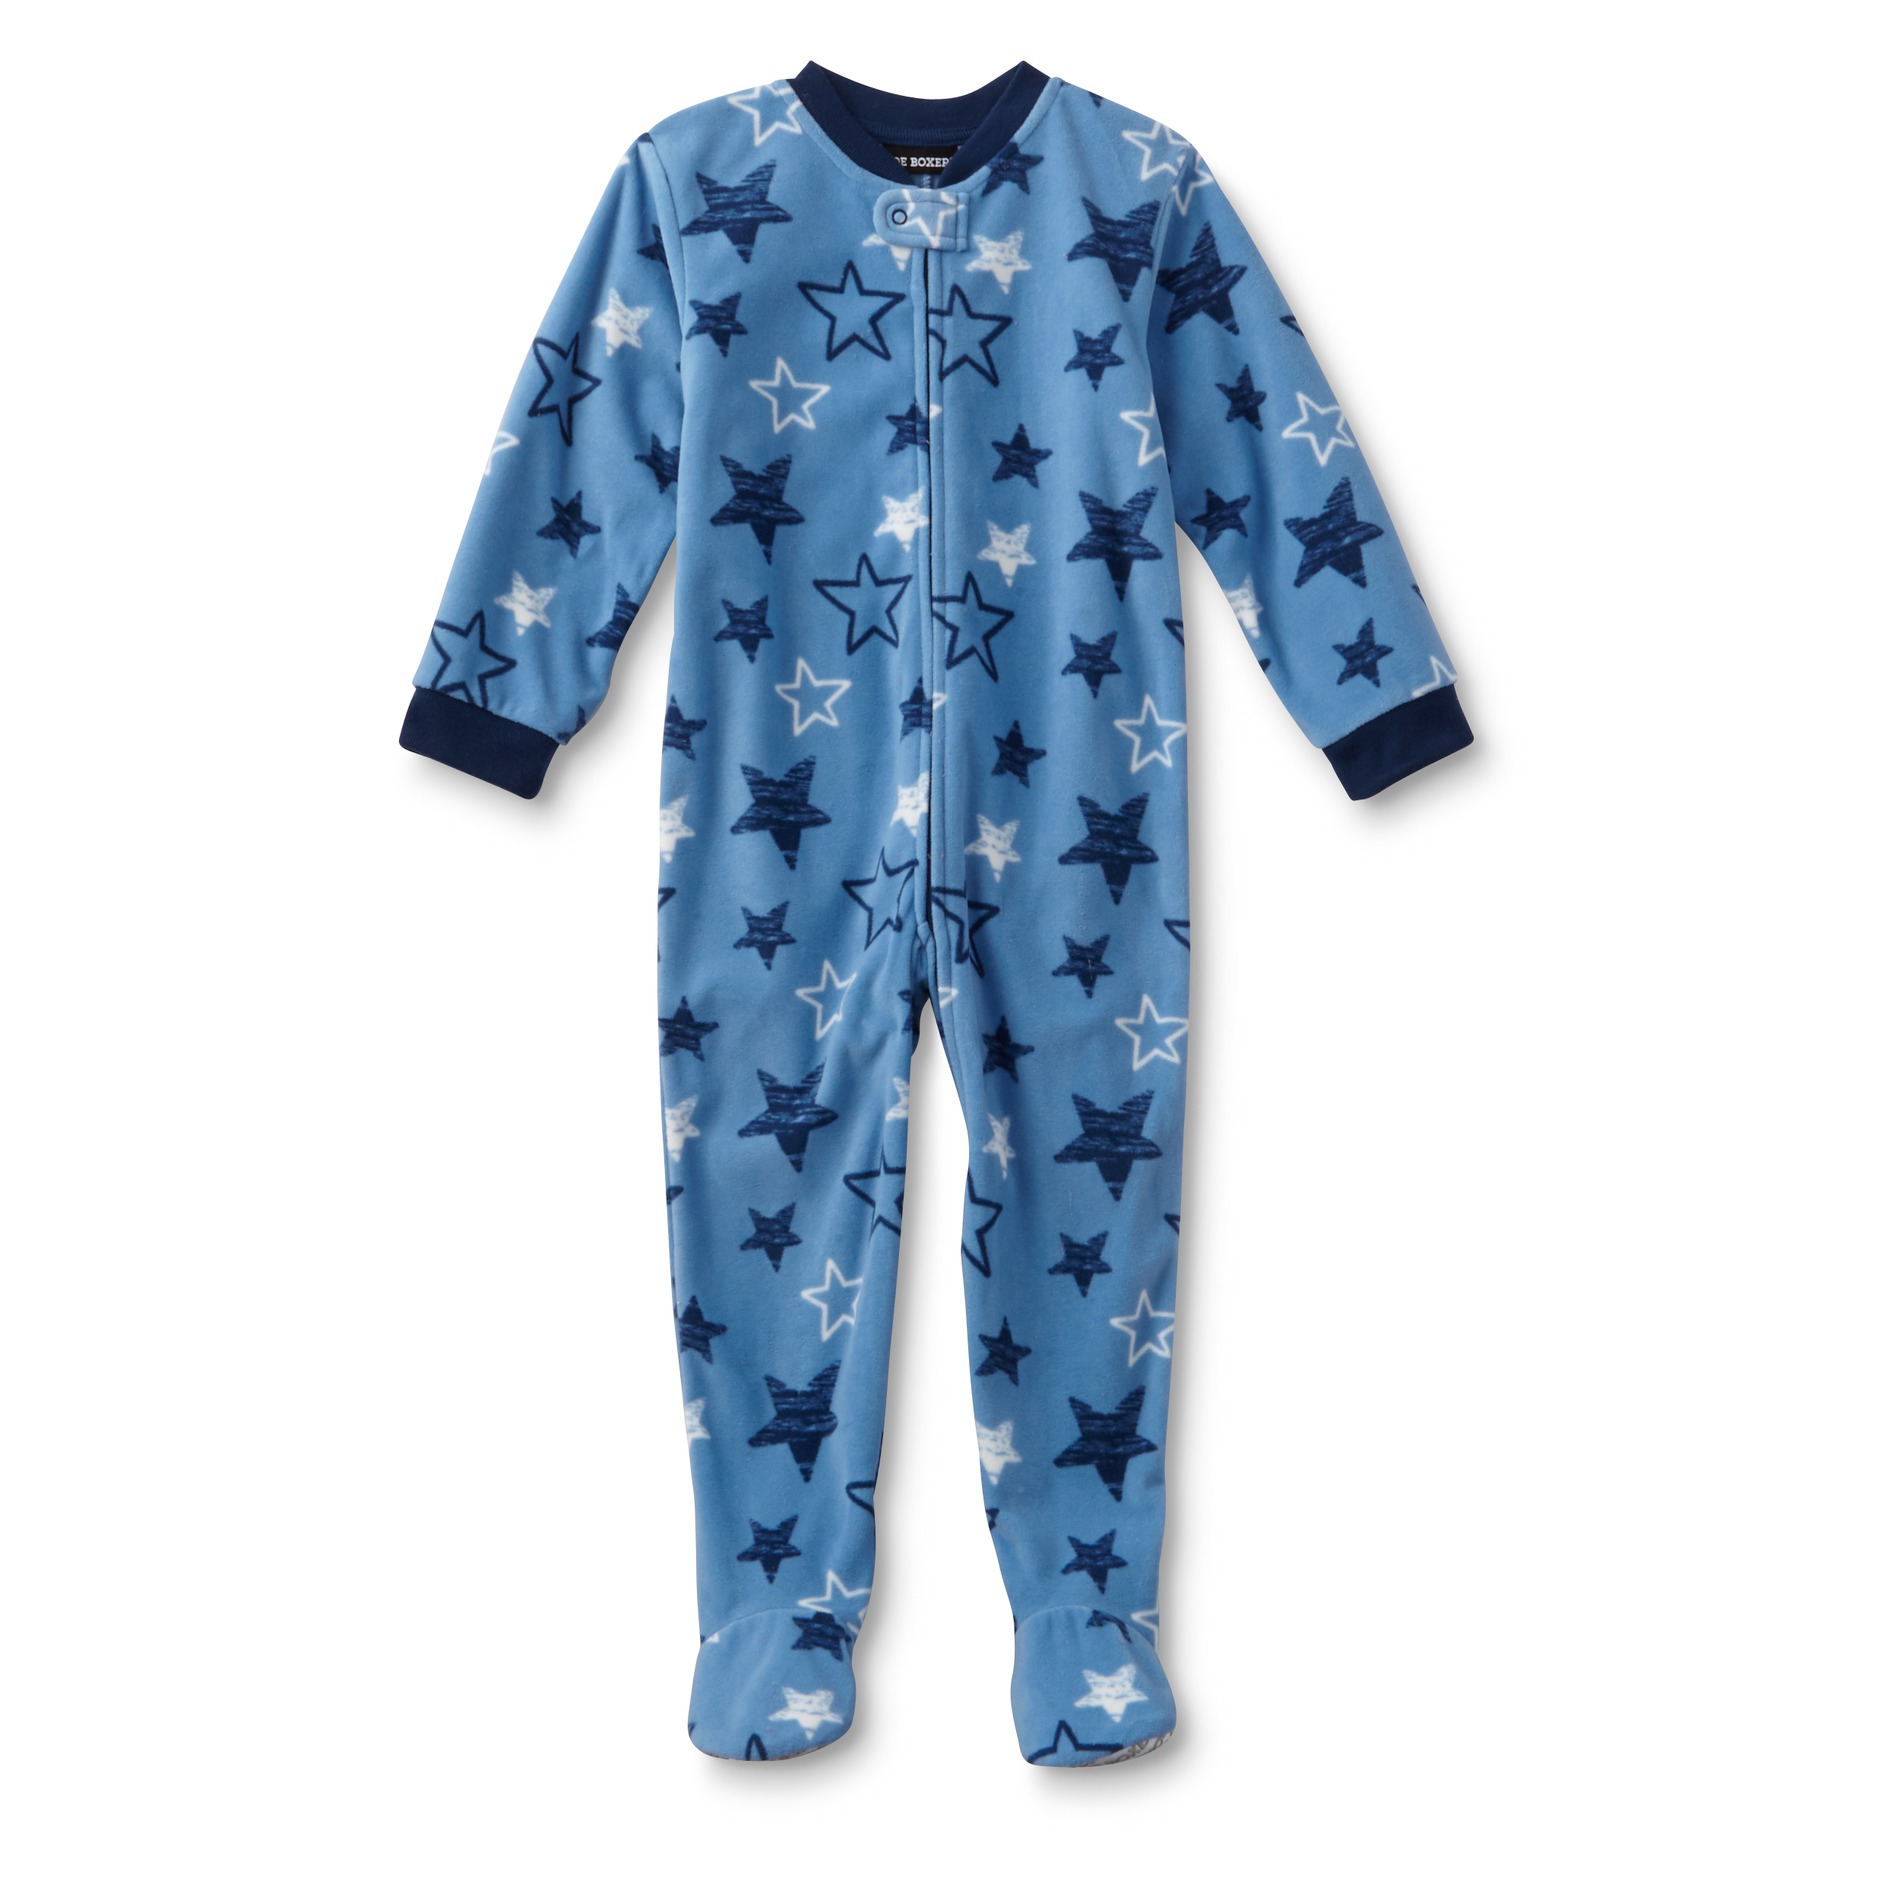 Joe Boxer Infant & Toddler Boy's Sleeper Pajamas - Stars